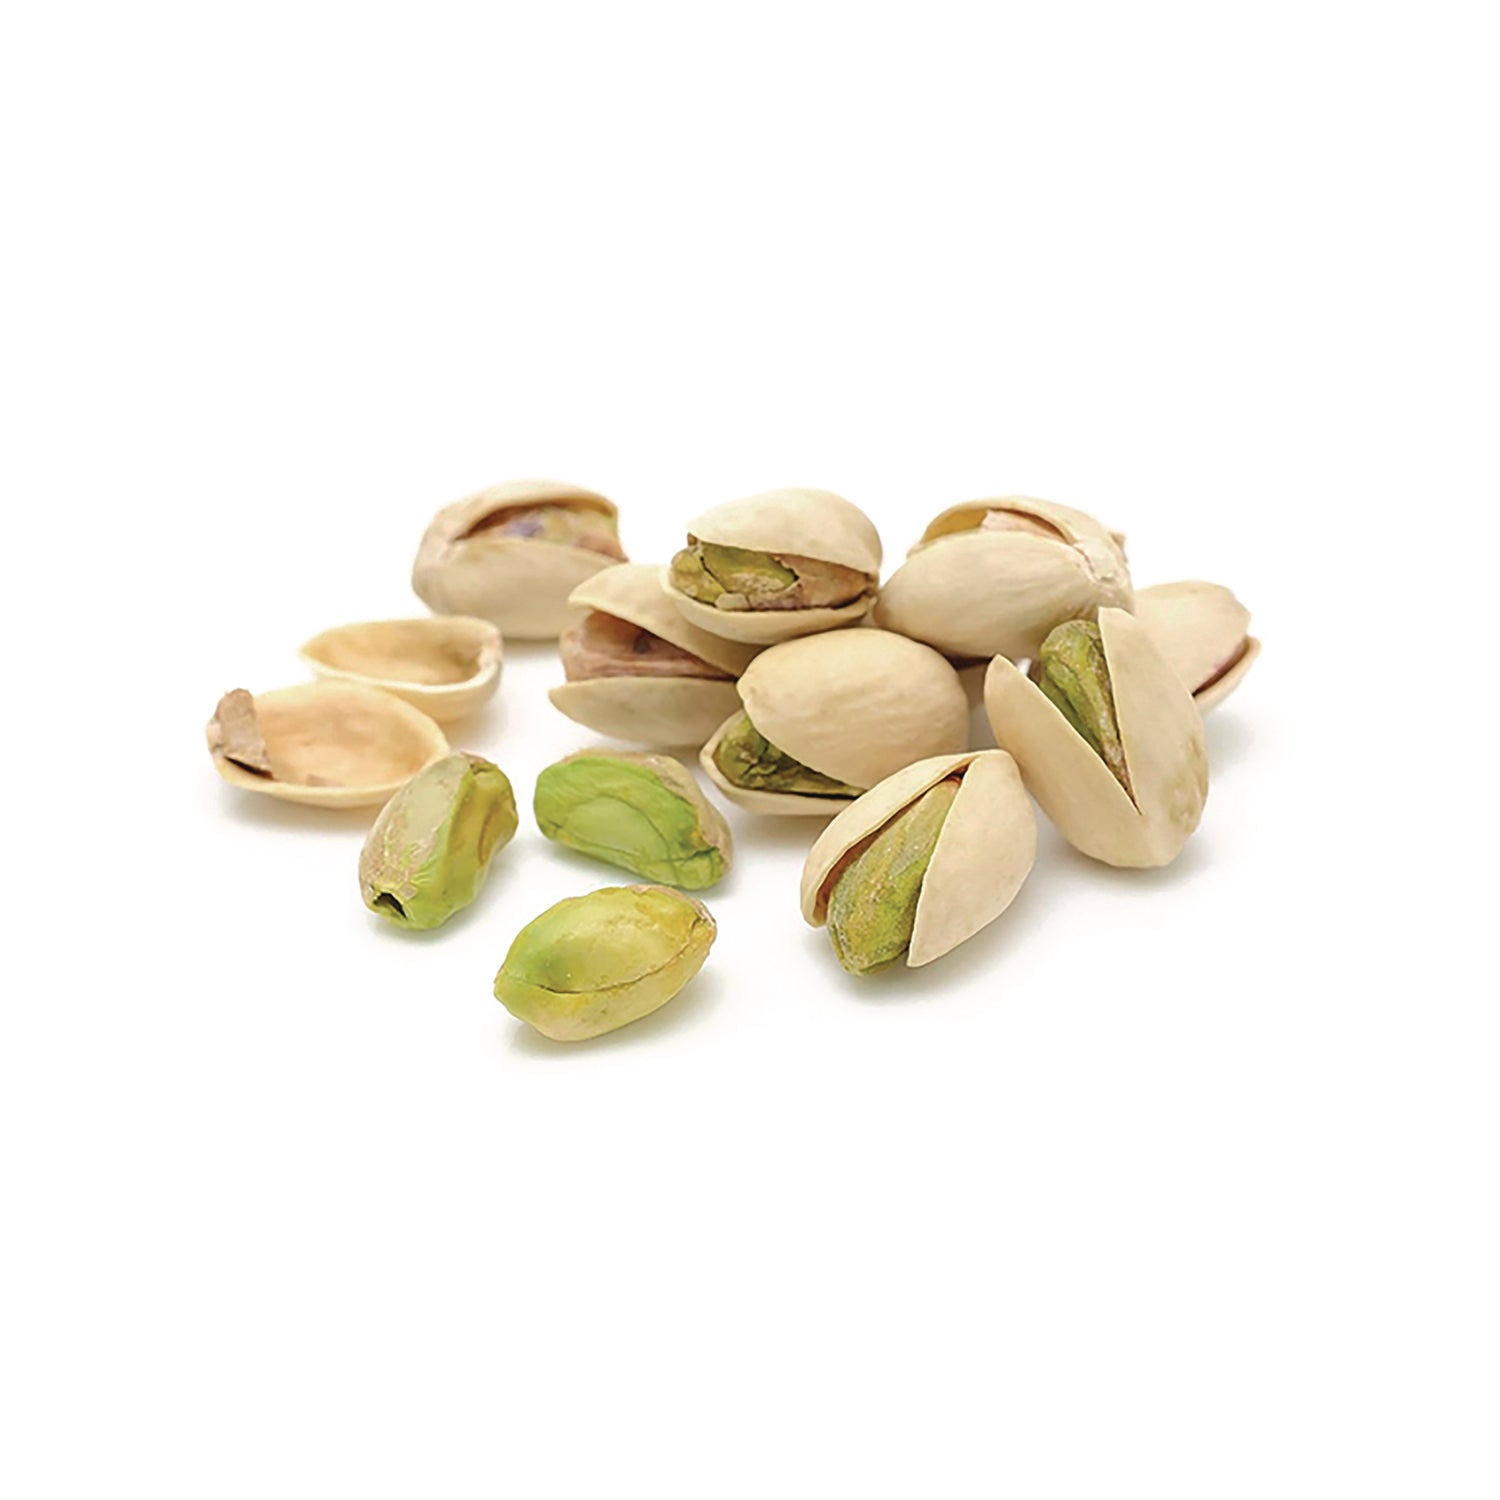 organic-pistachios-dry-roasted-with-sea-salt-7-oz-bag-12-carton_sef5182 - 3